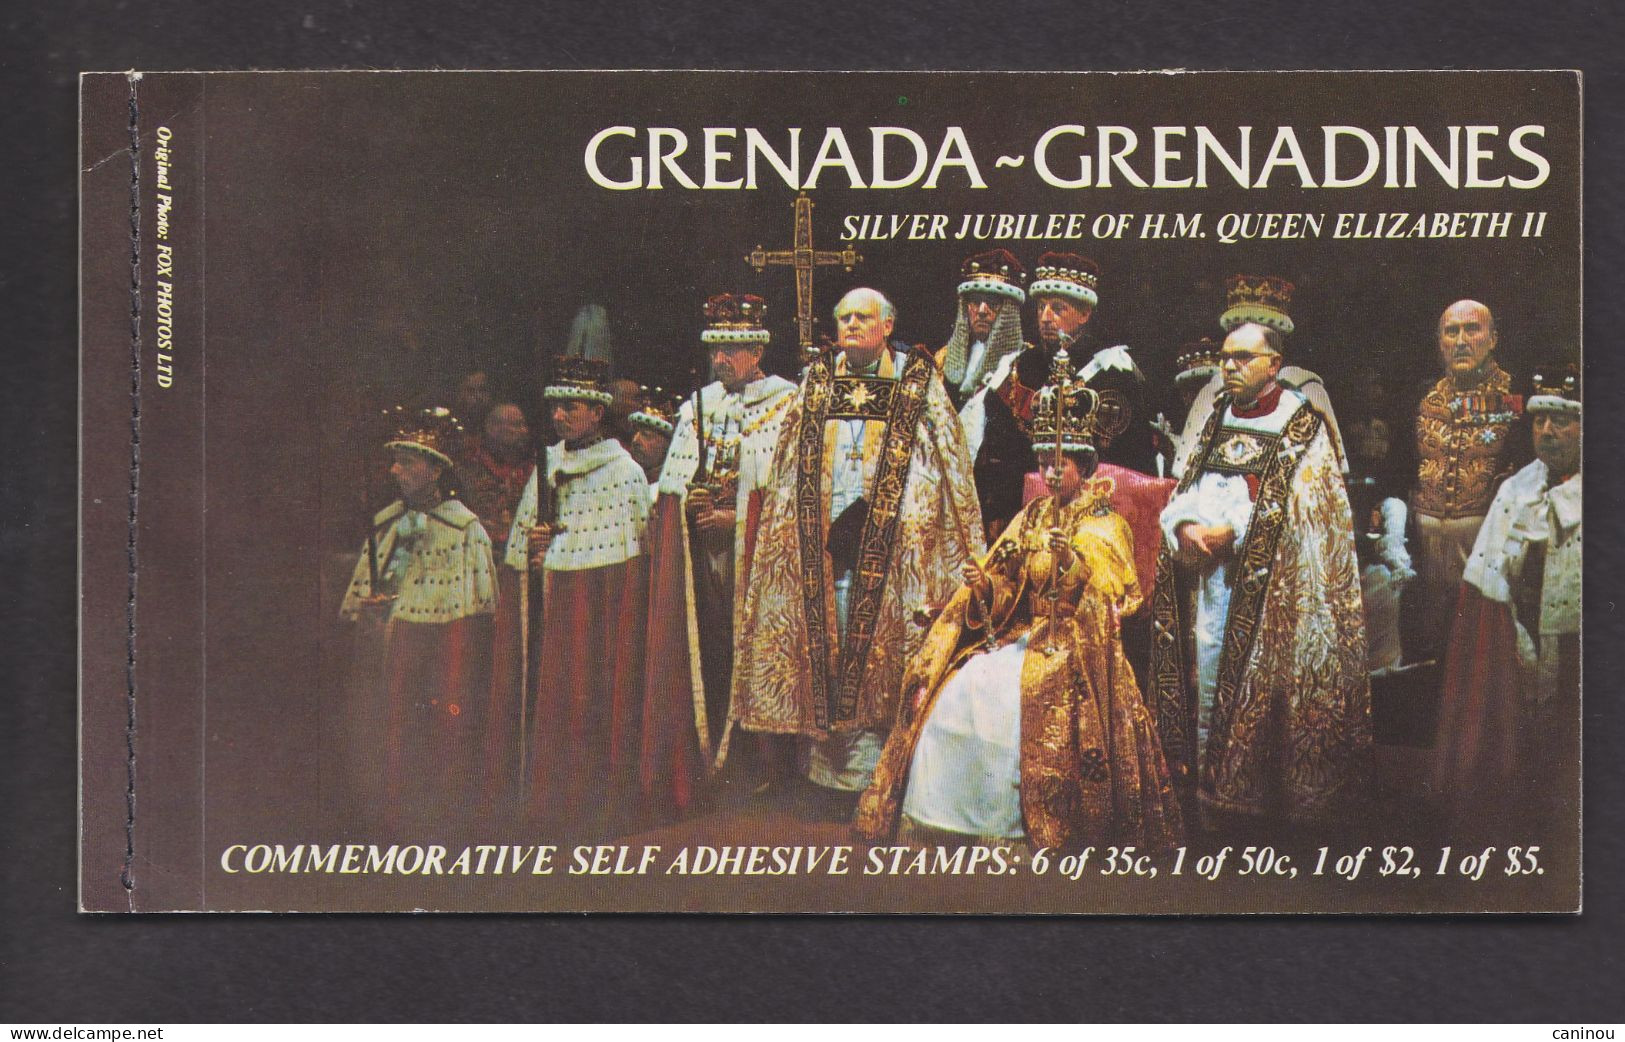 GRENADE GRENADINES CARNET  Y & T C 194 SILVER JUBILEE ELISABETH II 1997 - Grenada (1974-...)